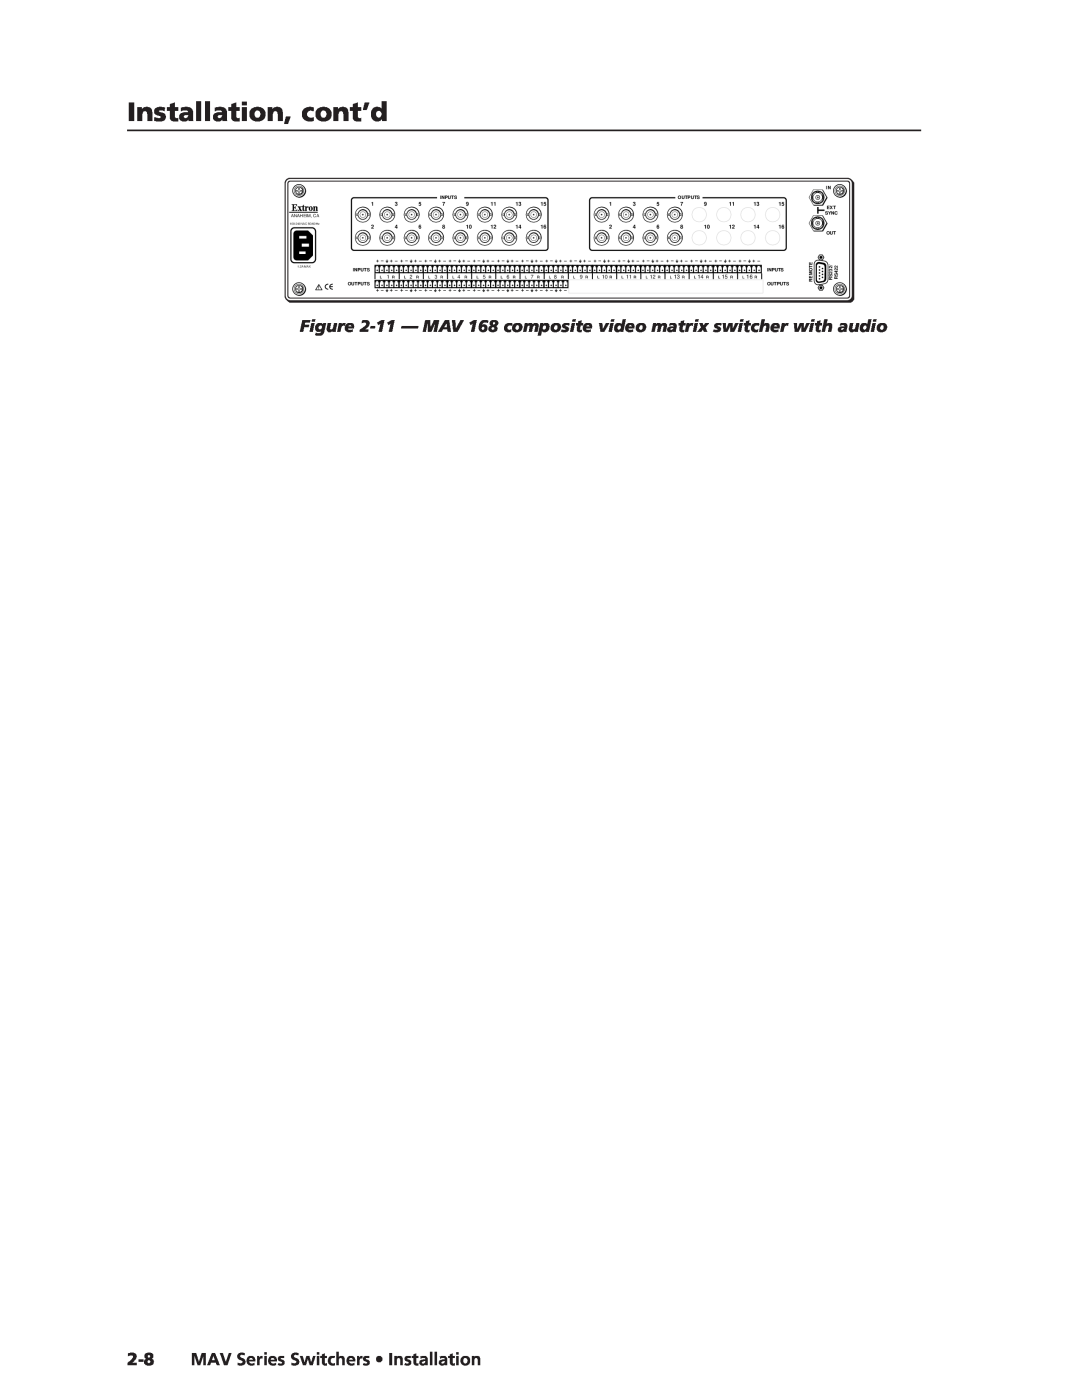 Extron electronic 11 - MAV 168 composite video matrix switcher with audio, MAV Series Switchers Installation, Inputs 